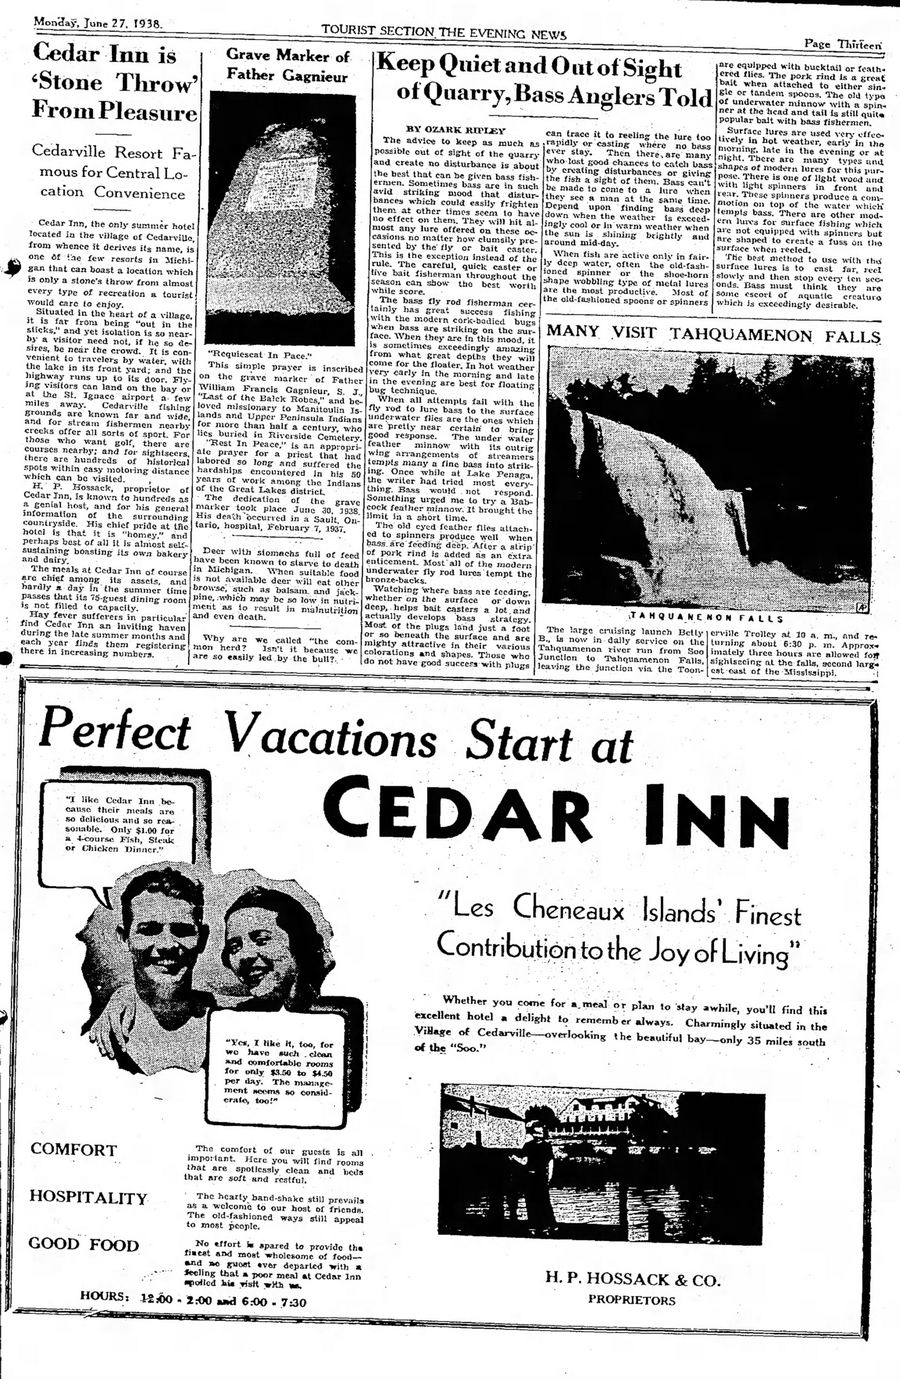 Cedar Inn - 1938 Ads And Article